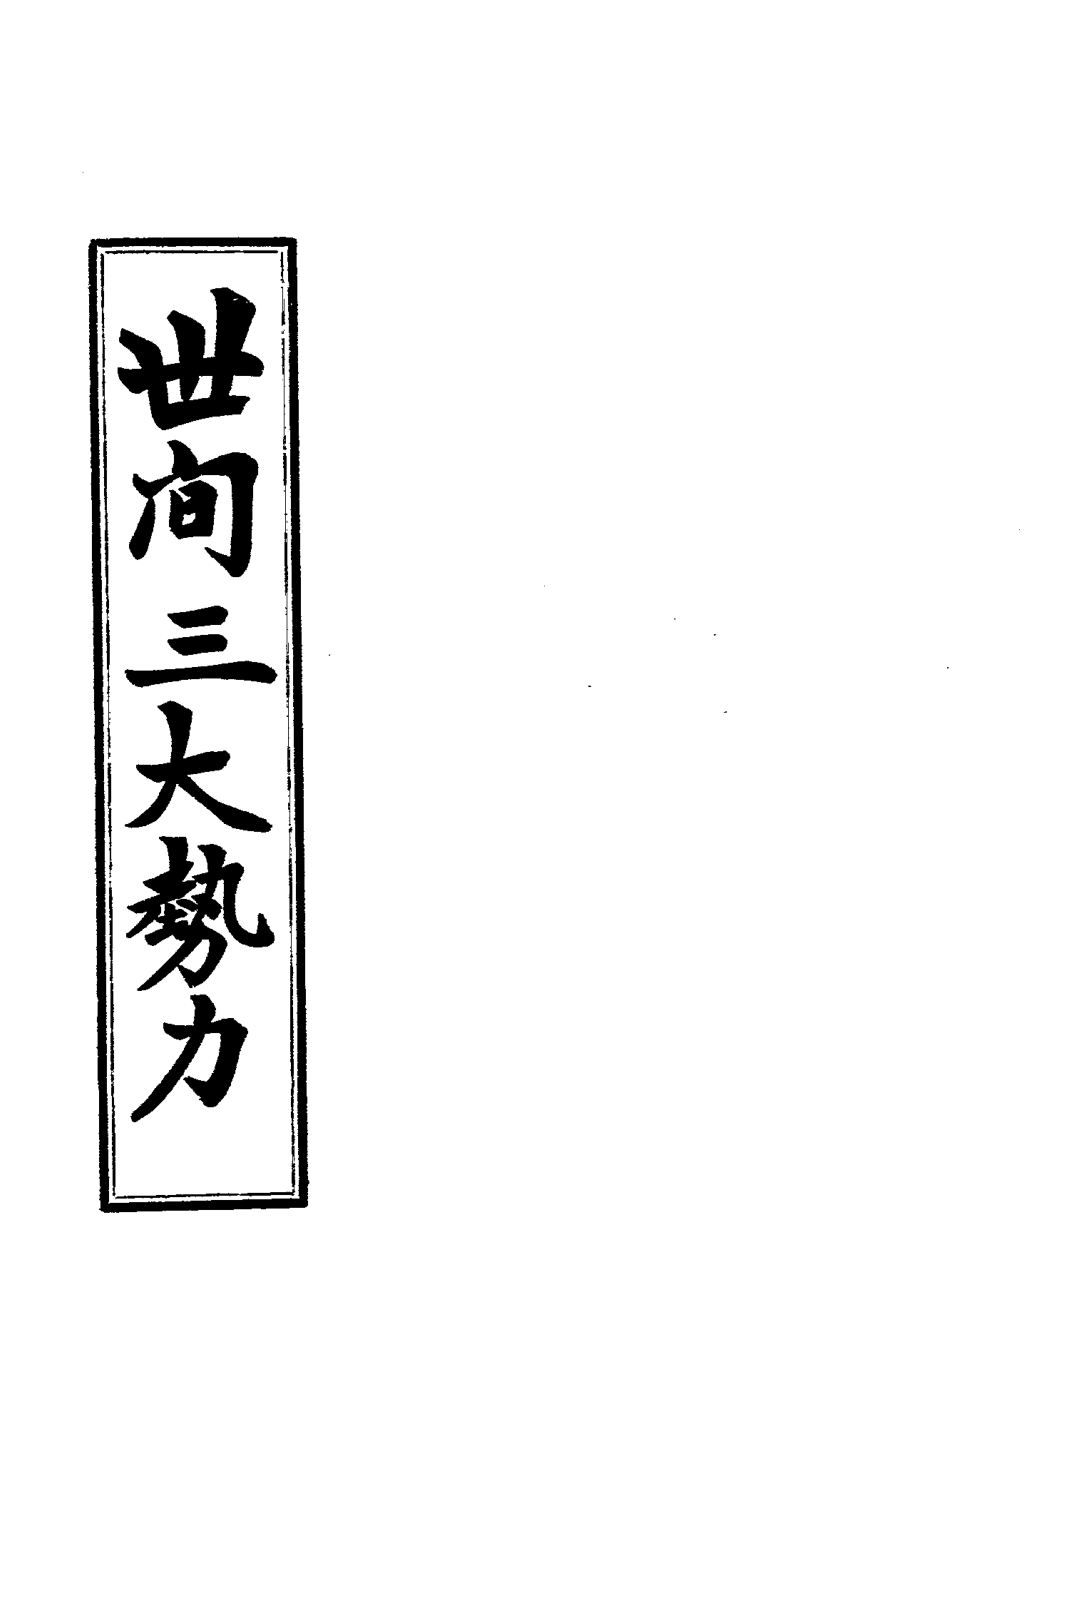 File:Shijian san da shili 1934.png